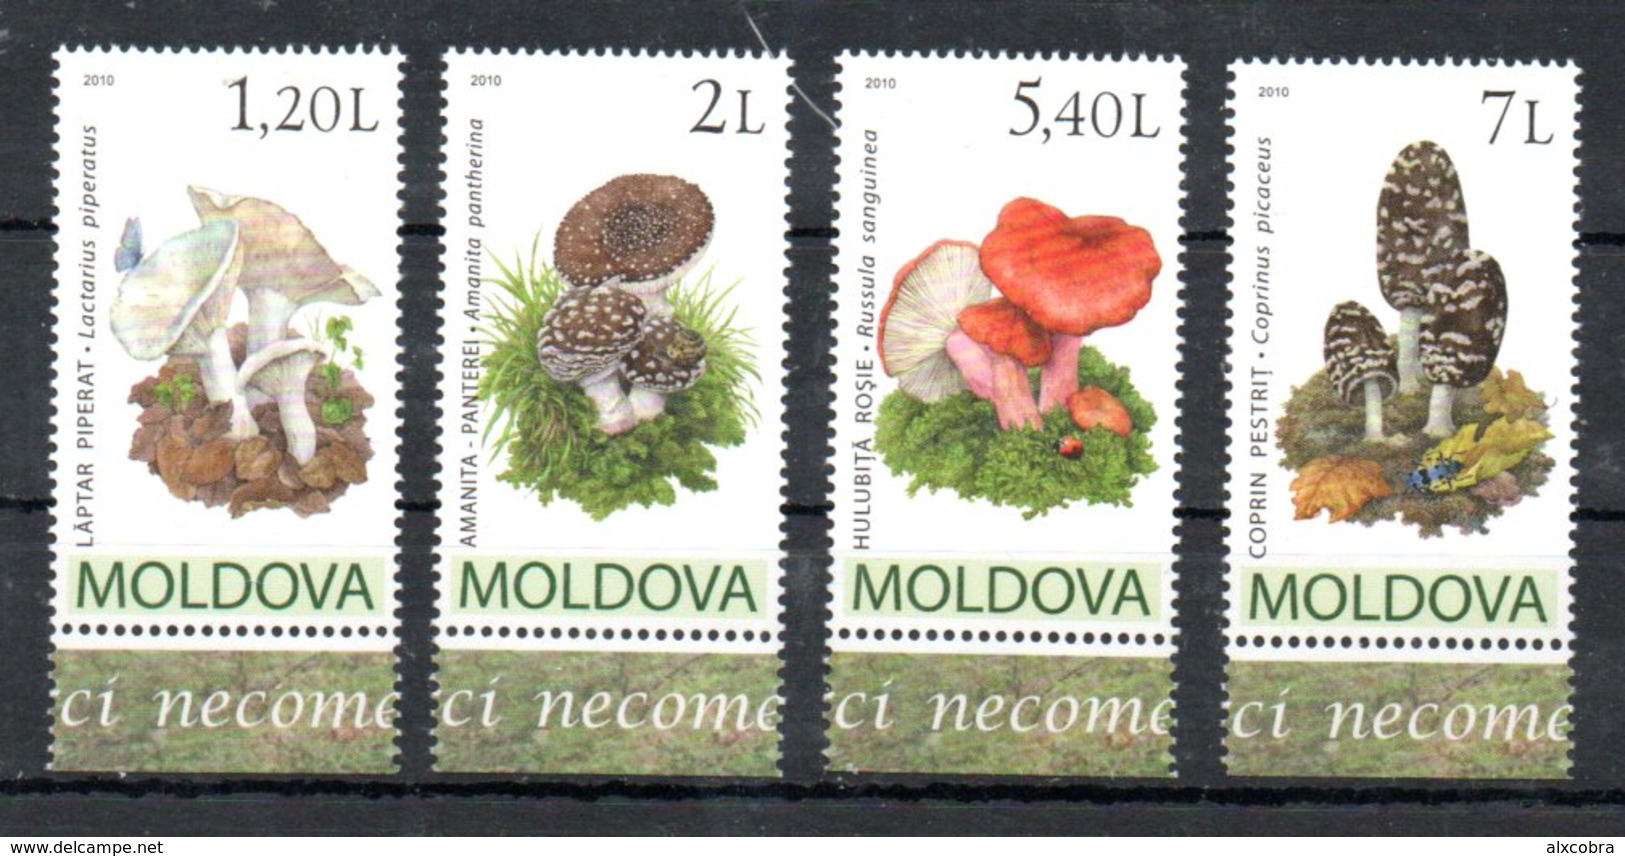 Moldavia Moldova Mushrooms Fungi 2010 MNH - Moldavia